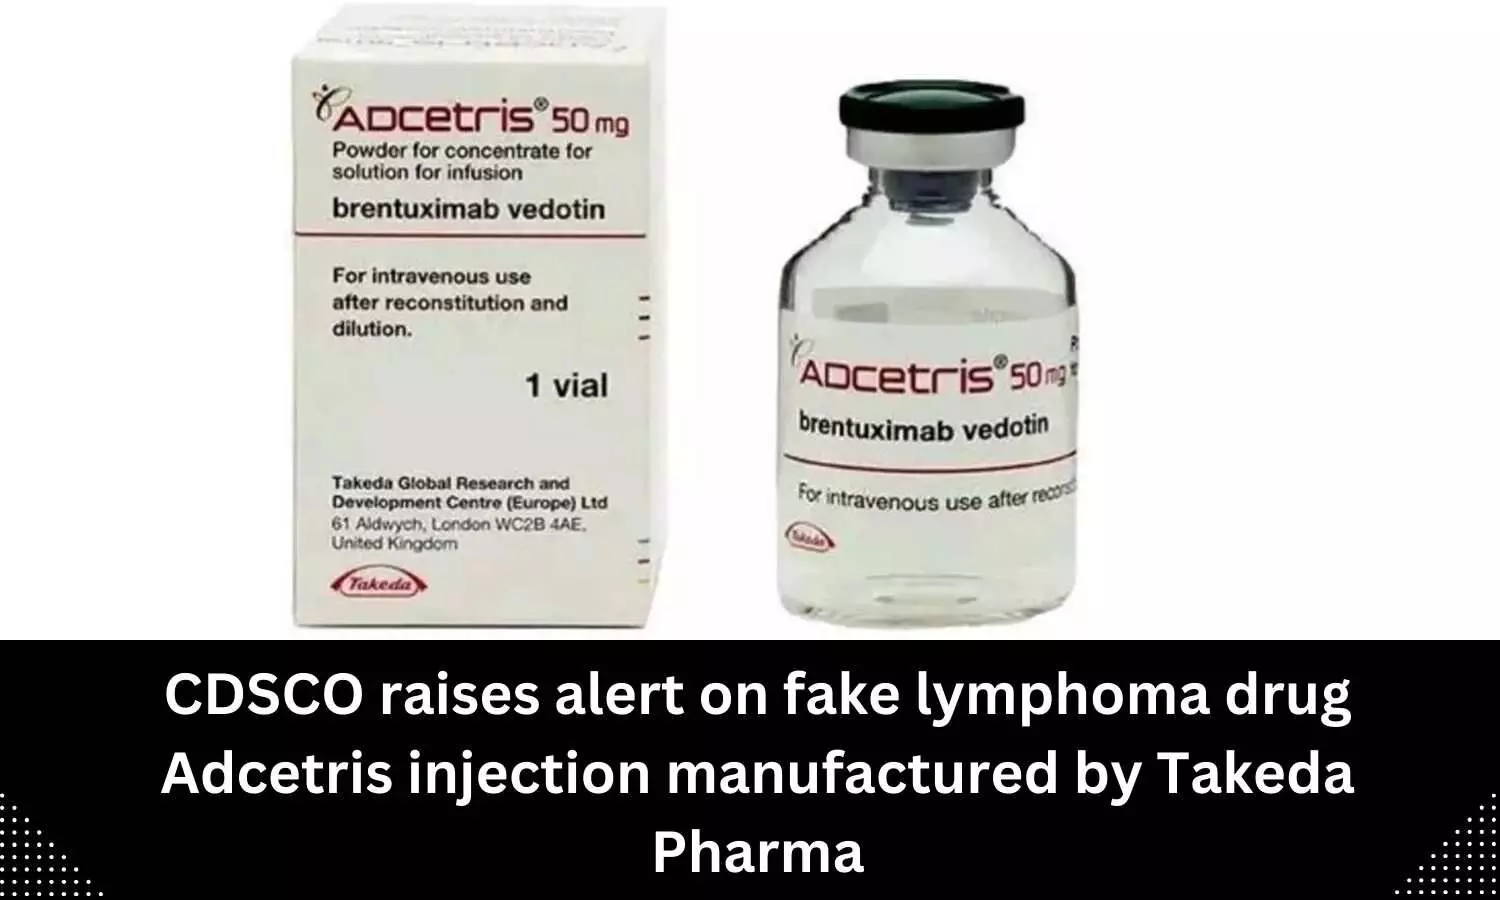 CDSCO raises alert on fake Adcetris injection manufactured by Takeda Pharma